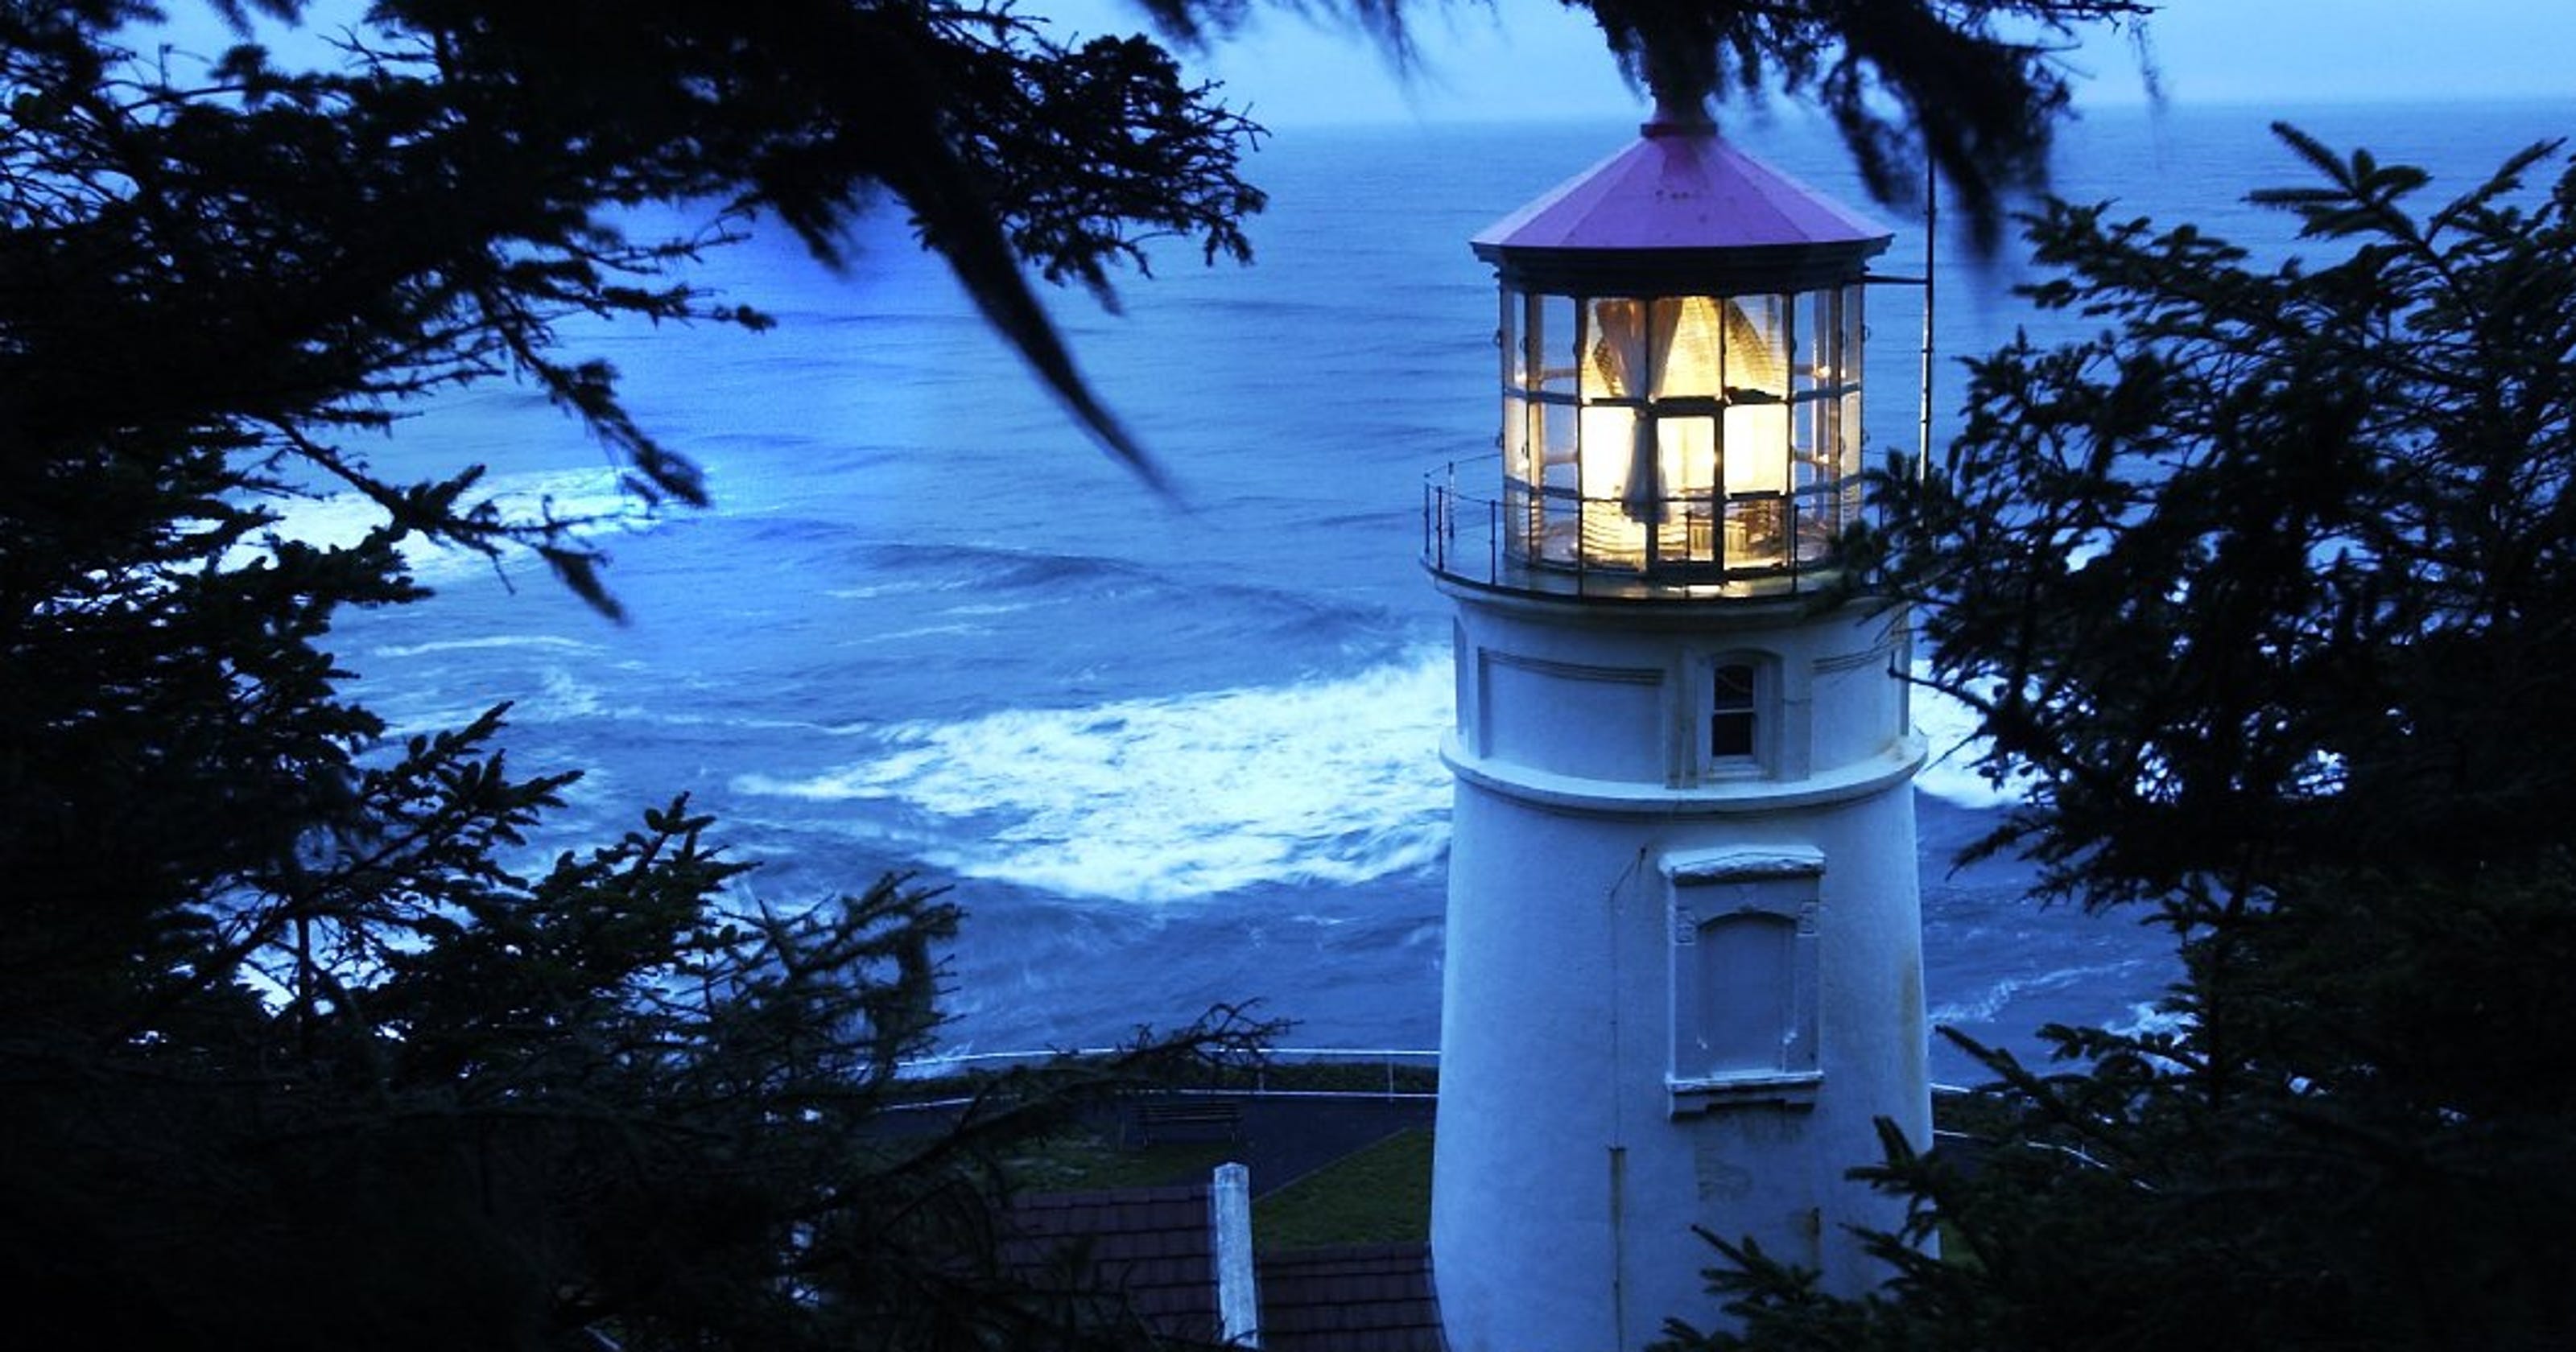 oregon coast lighthouse tour